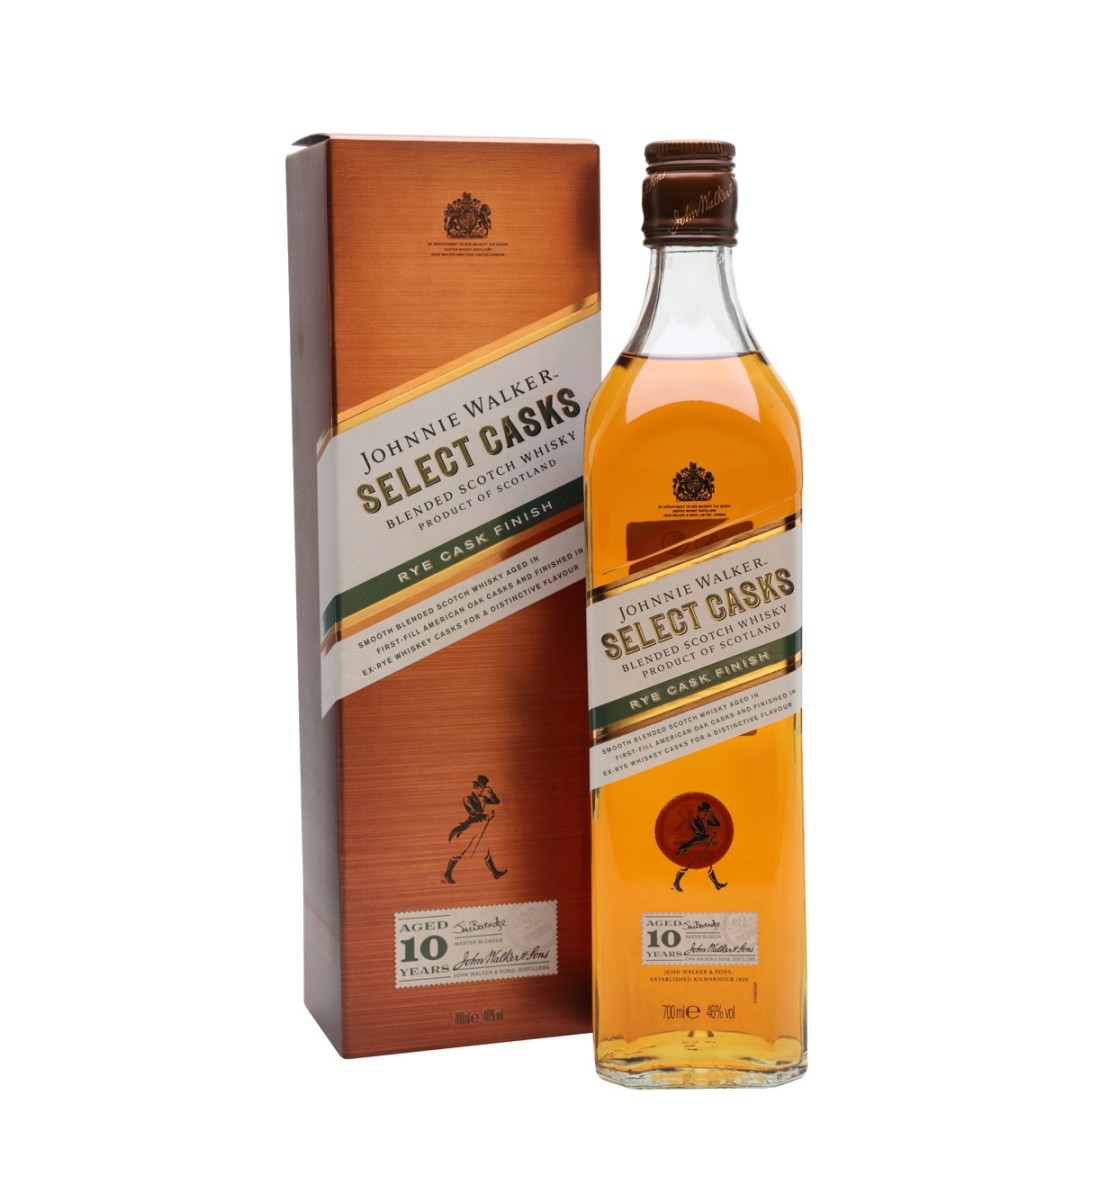 Johnnie Walker Select Casks Rye Cask Finish Whisky 10 ani 0.7L